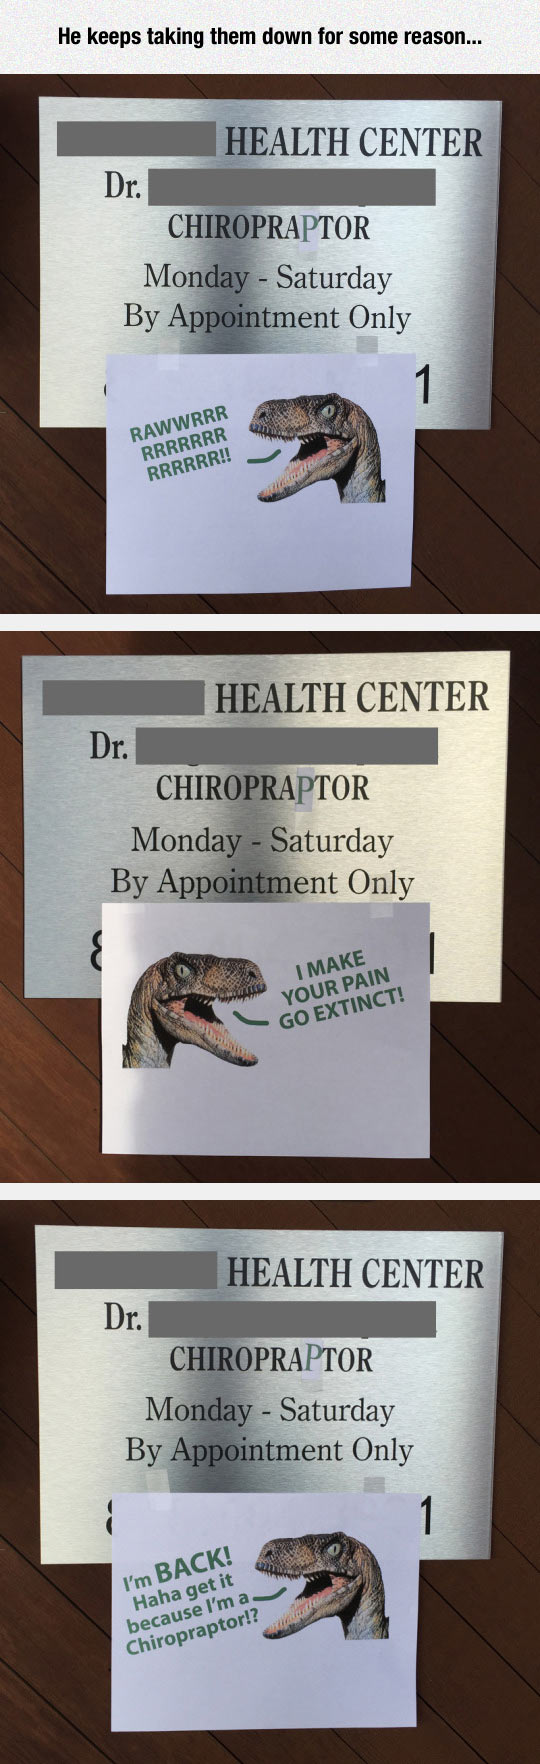 cool-health-center-plate-prank-dinosaur